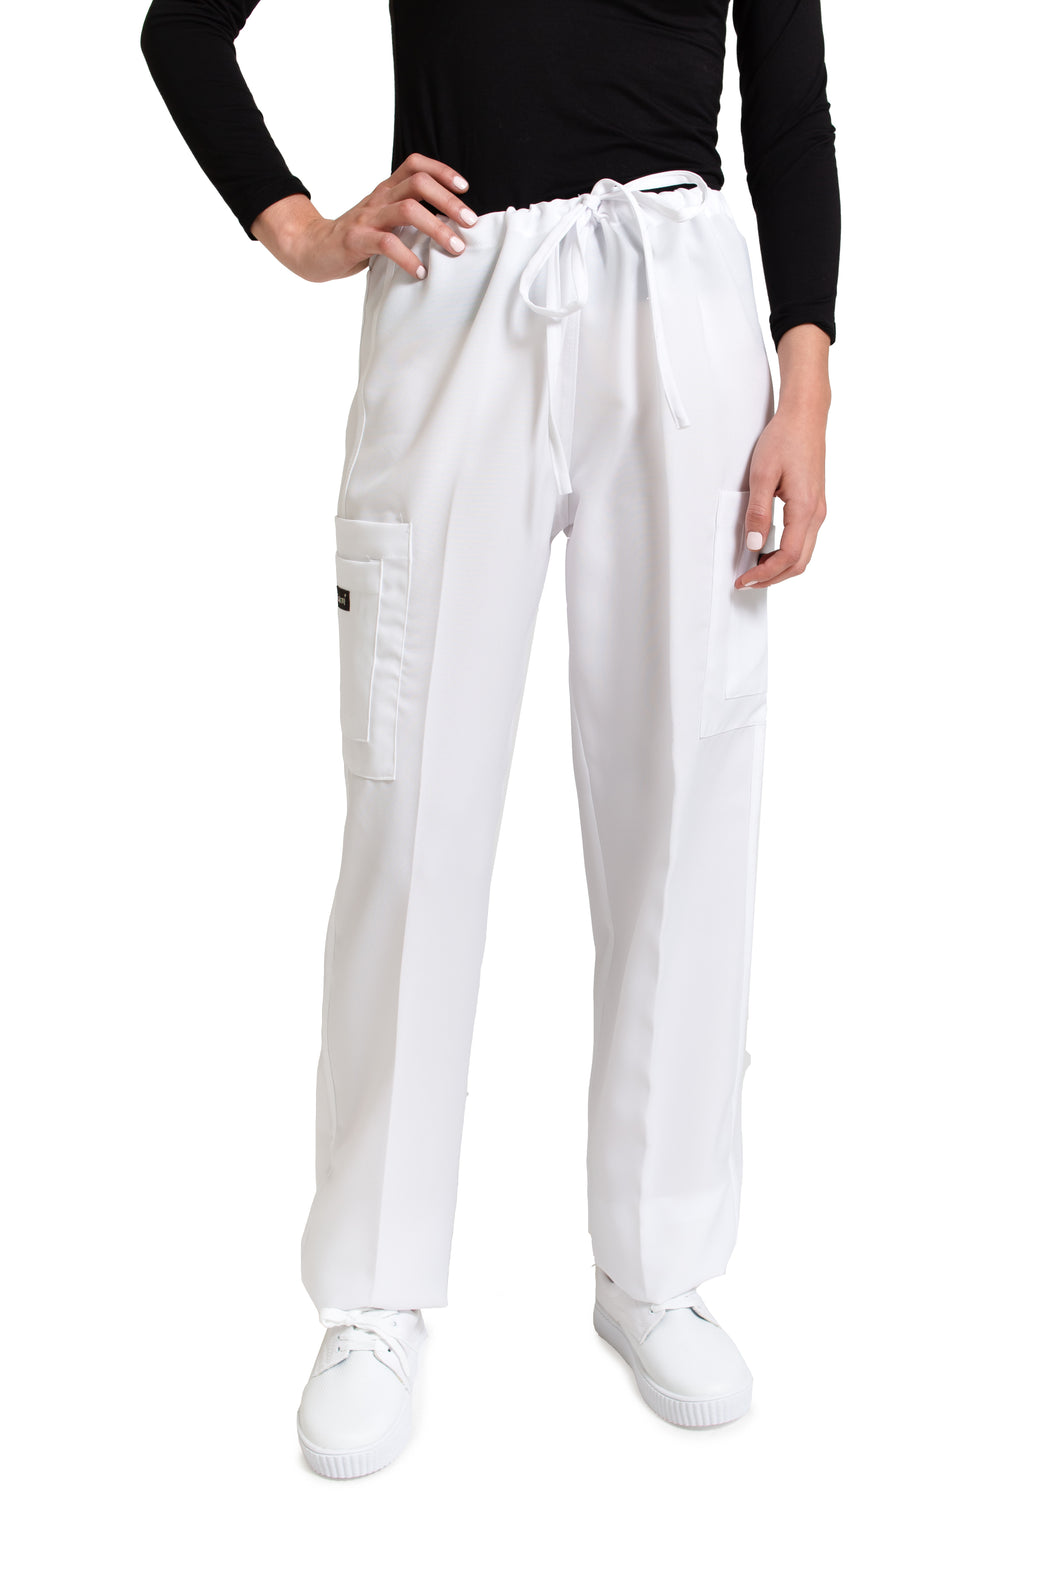 Pantalón Pant JP-13 UNISEX-Color Blanco-JUANPA